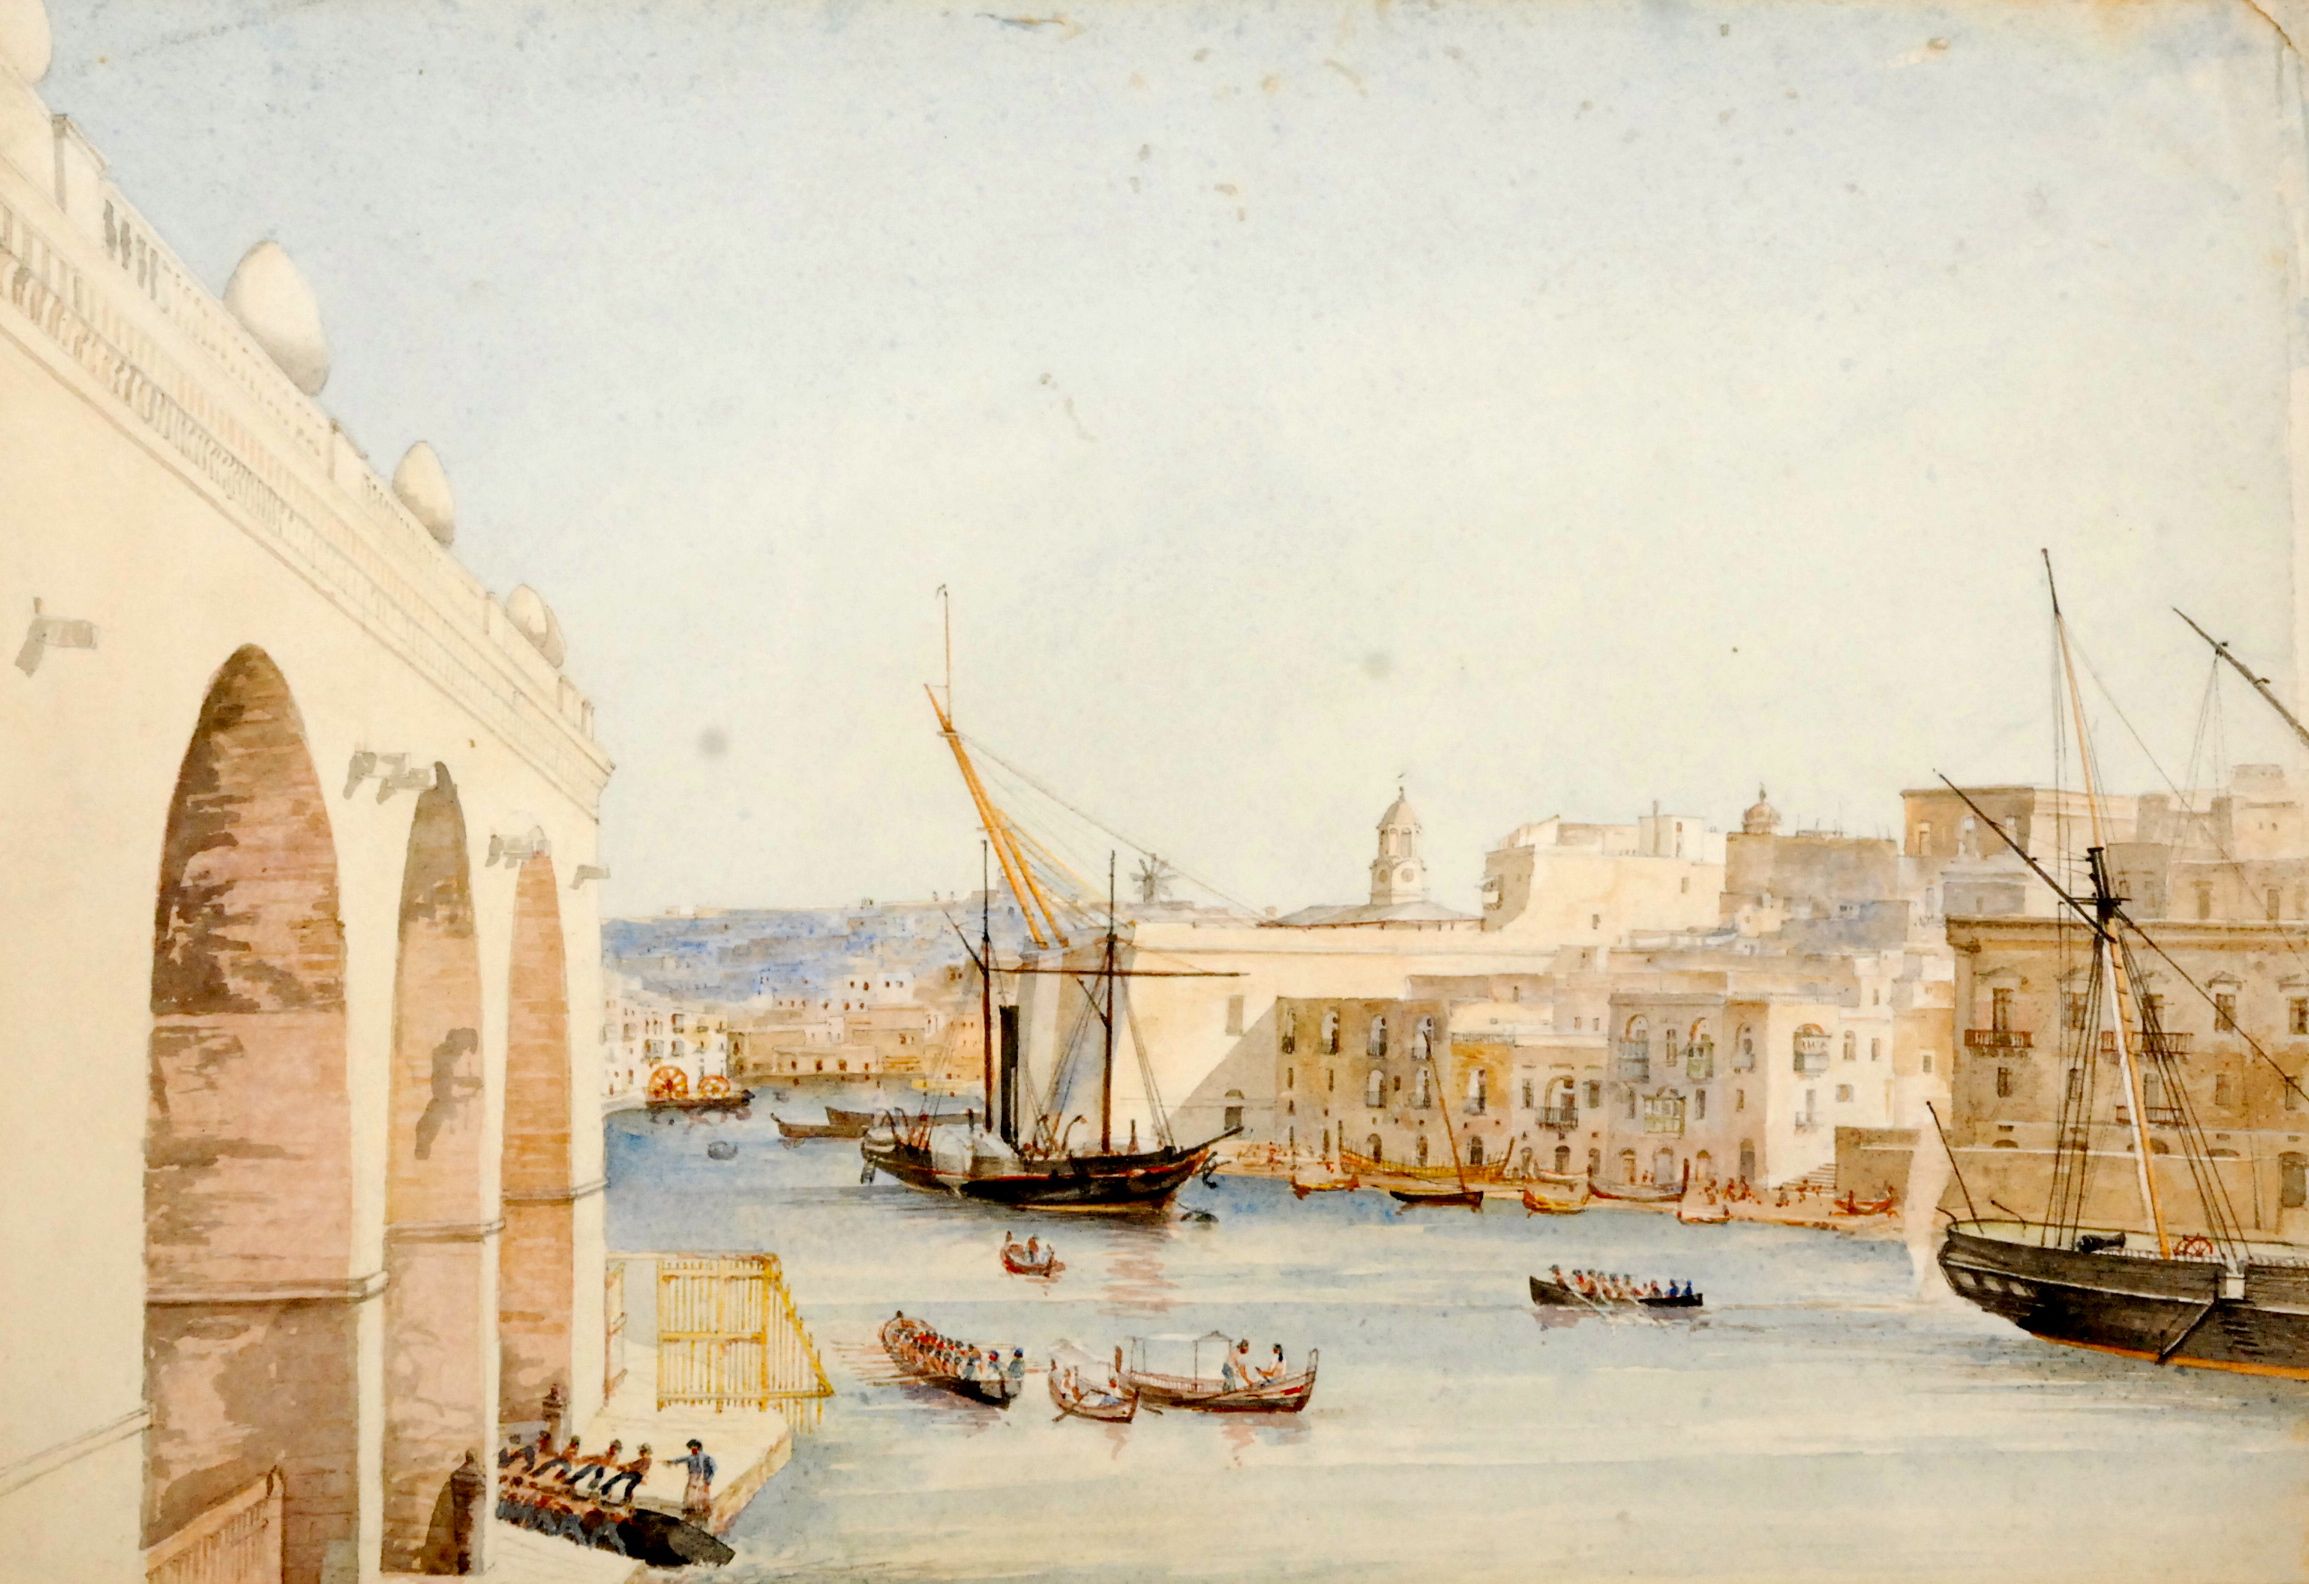 Classical Mediterranean (Malta?) harbour
19th century watercolour
24 x 34.5cm